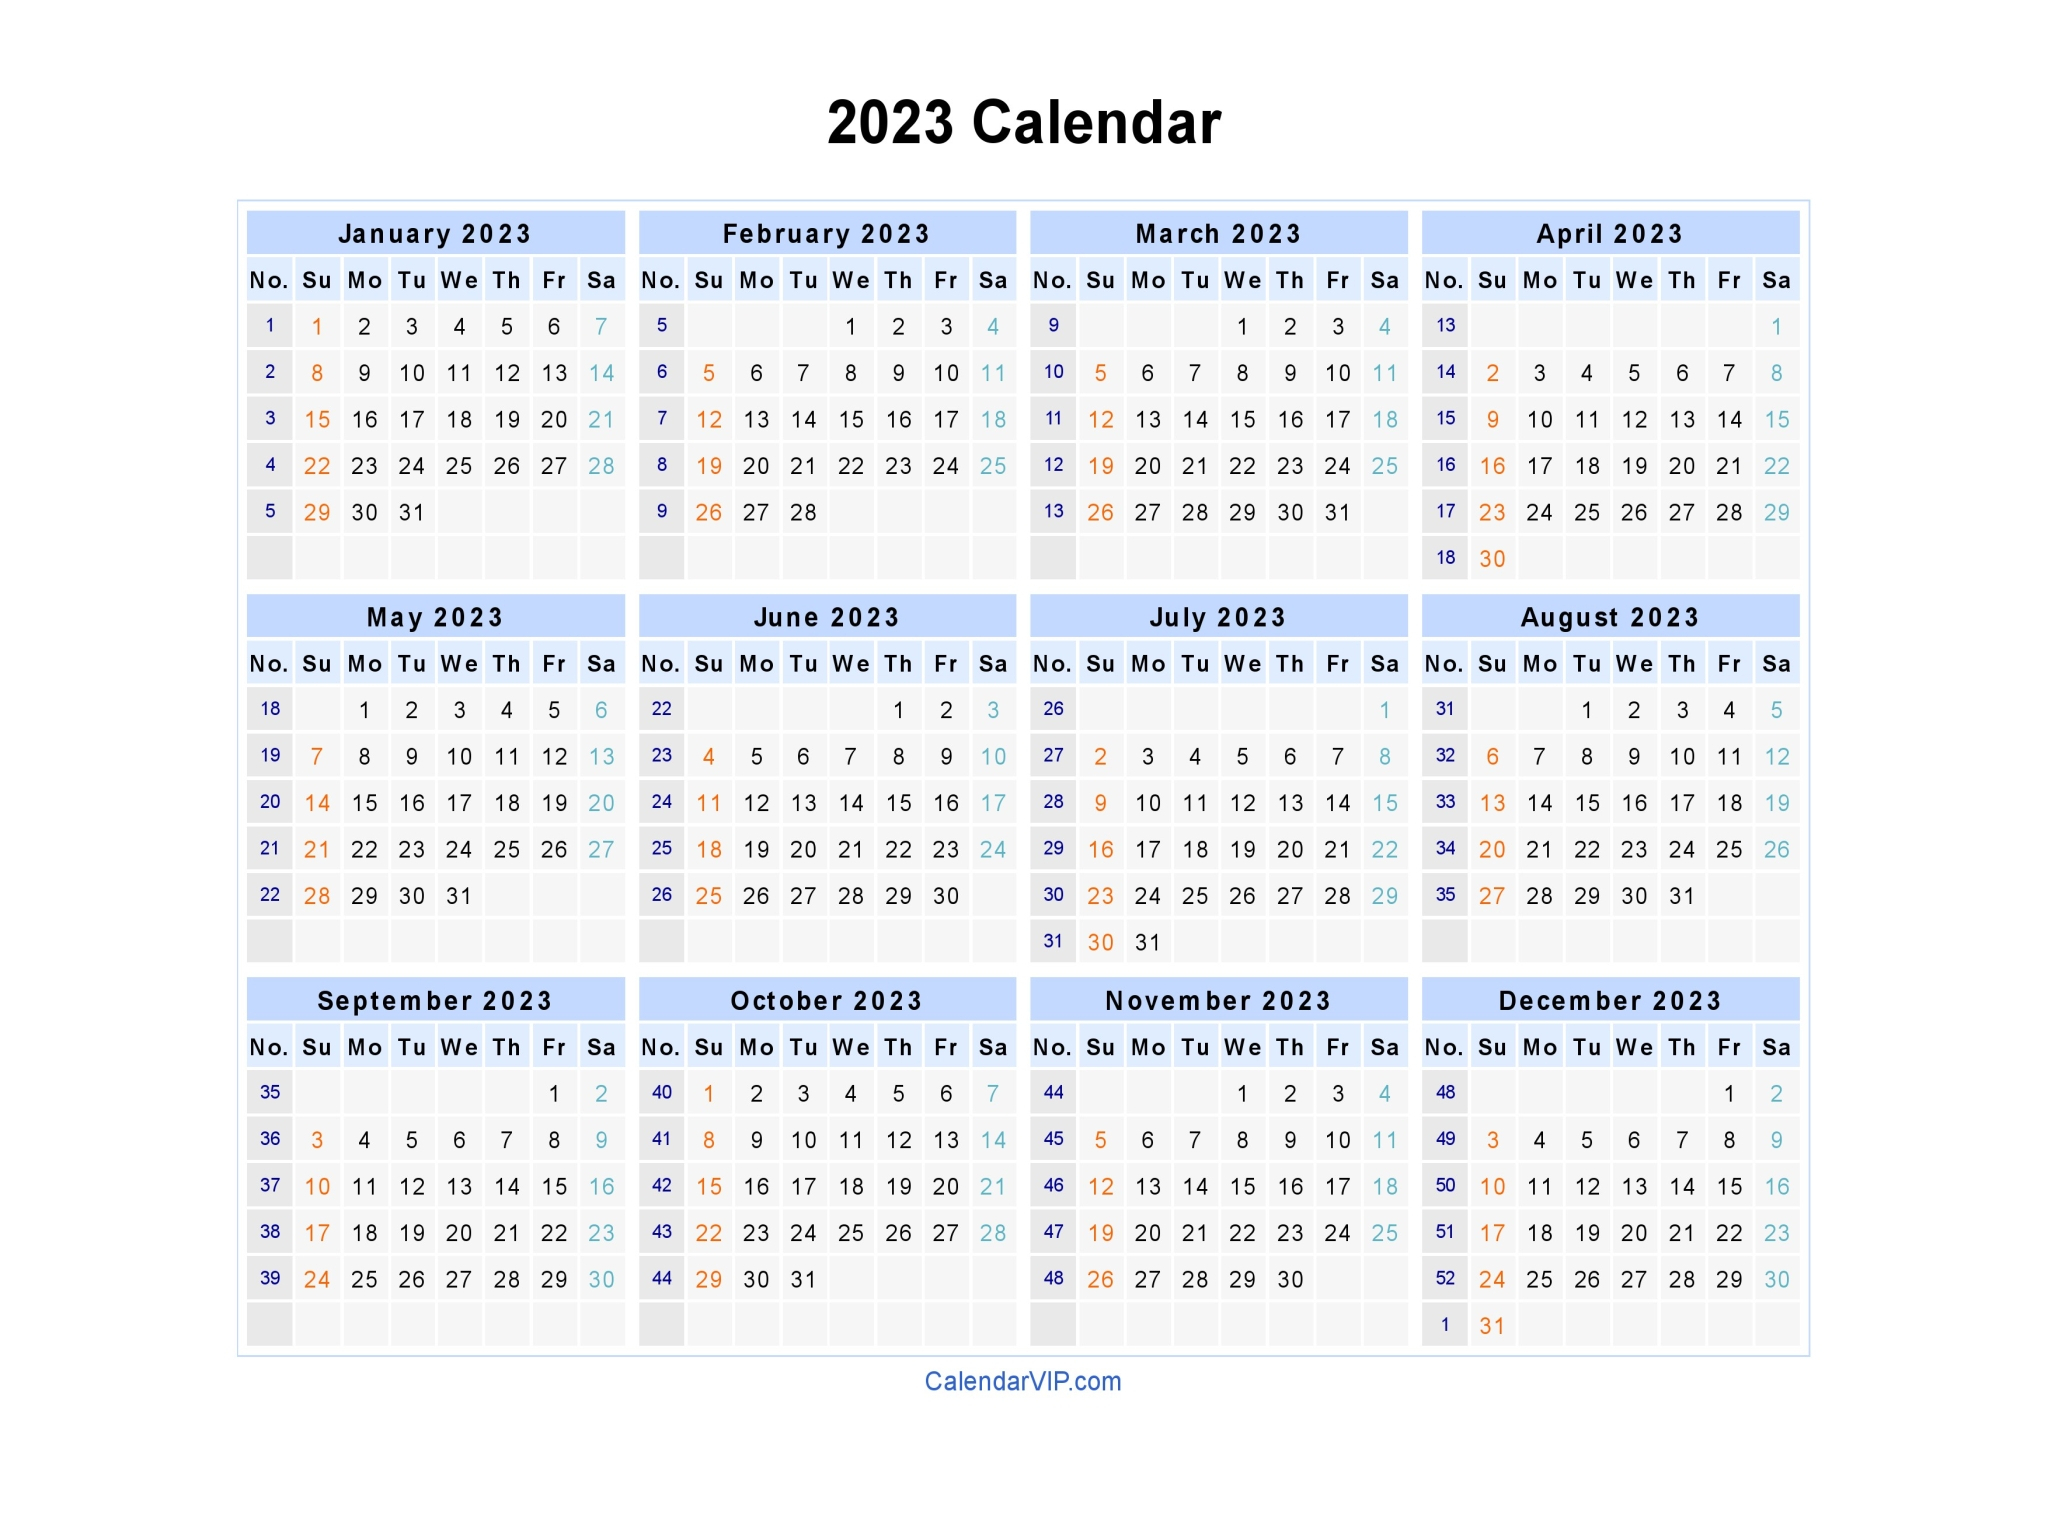 Blank April 2020 Calendar Printable - Colona.rsd7